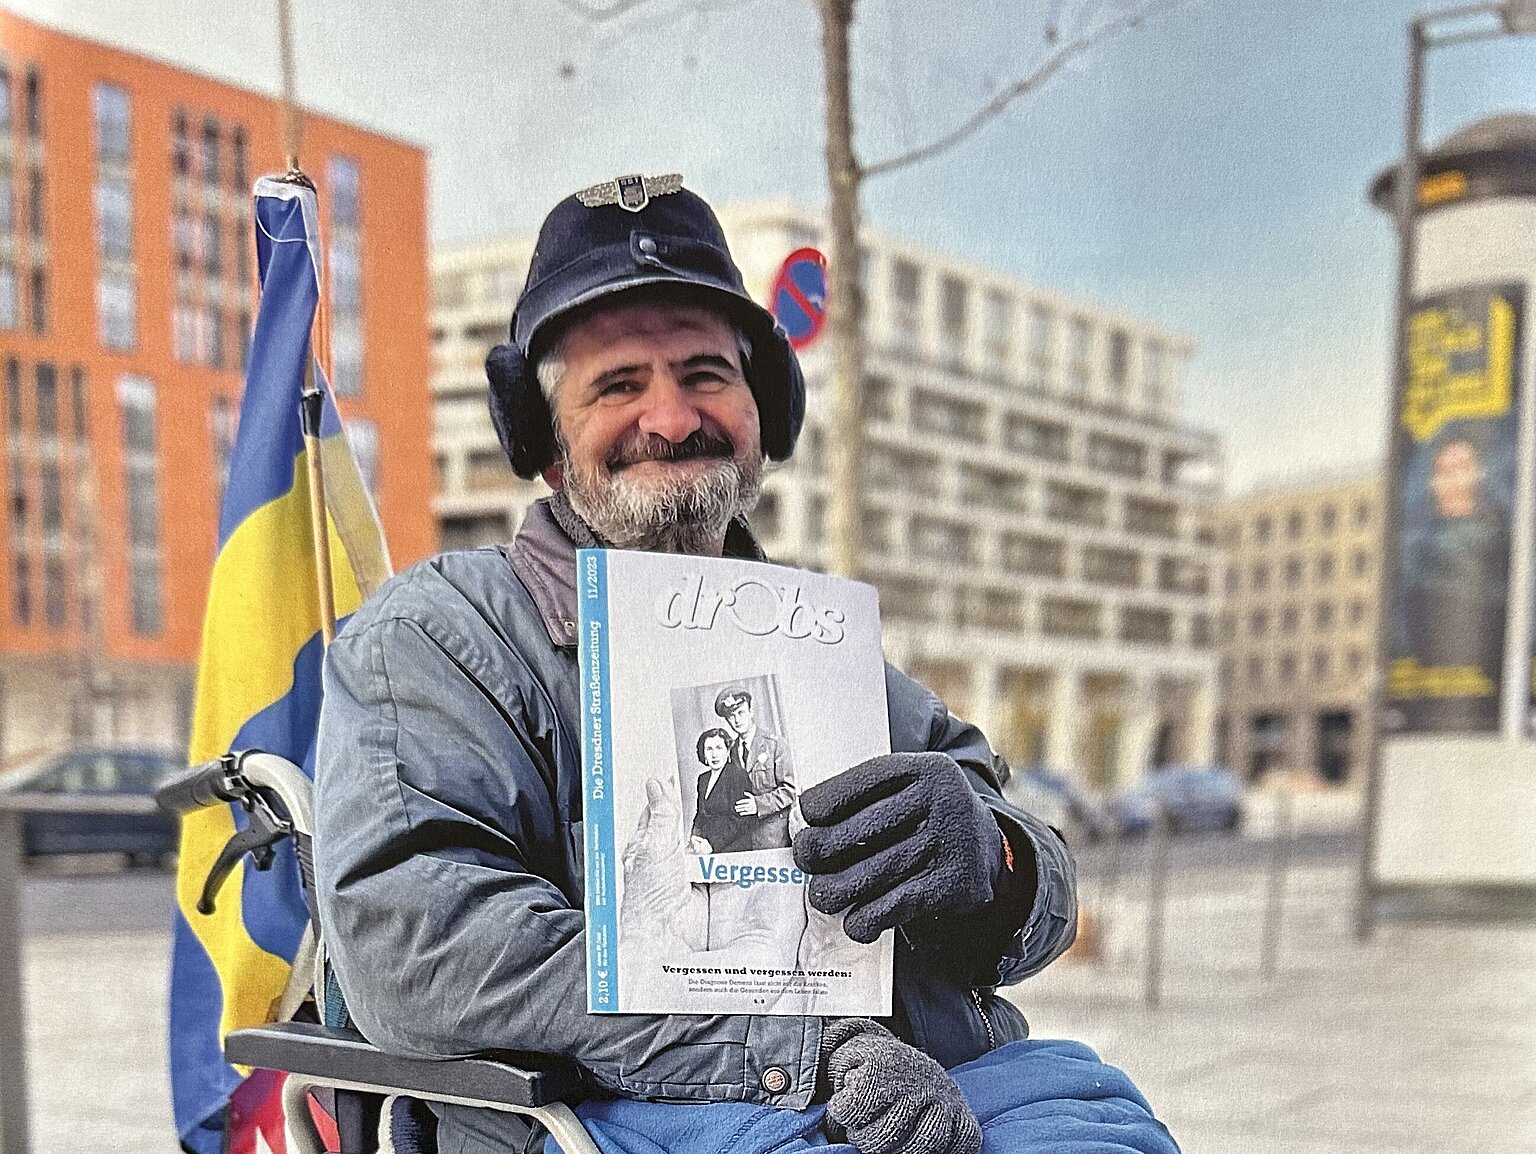 Foto des Verküfers Dimitri, Straßenverkäufer des Dresdner Straßenmagazins "drobs". – 